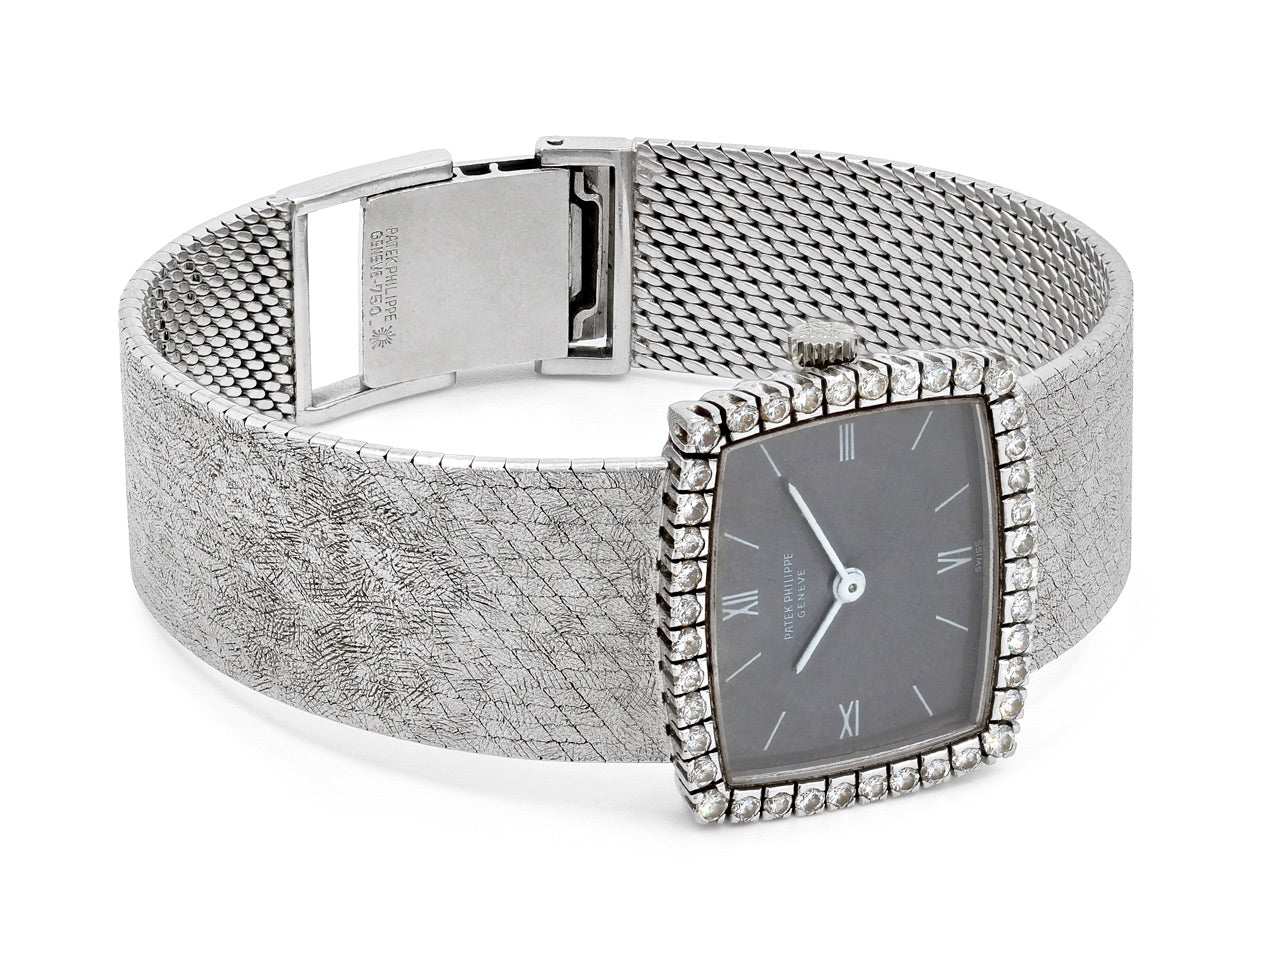 Patek Philippe Lady's Diamond Watch in 18K White Gold